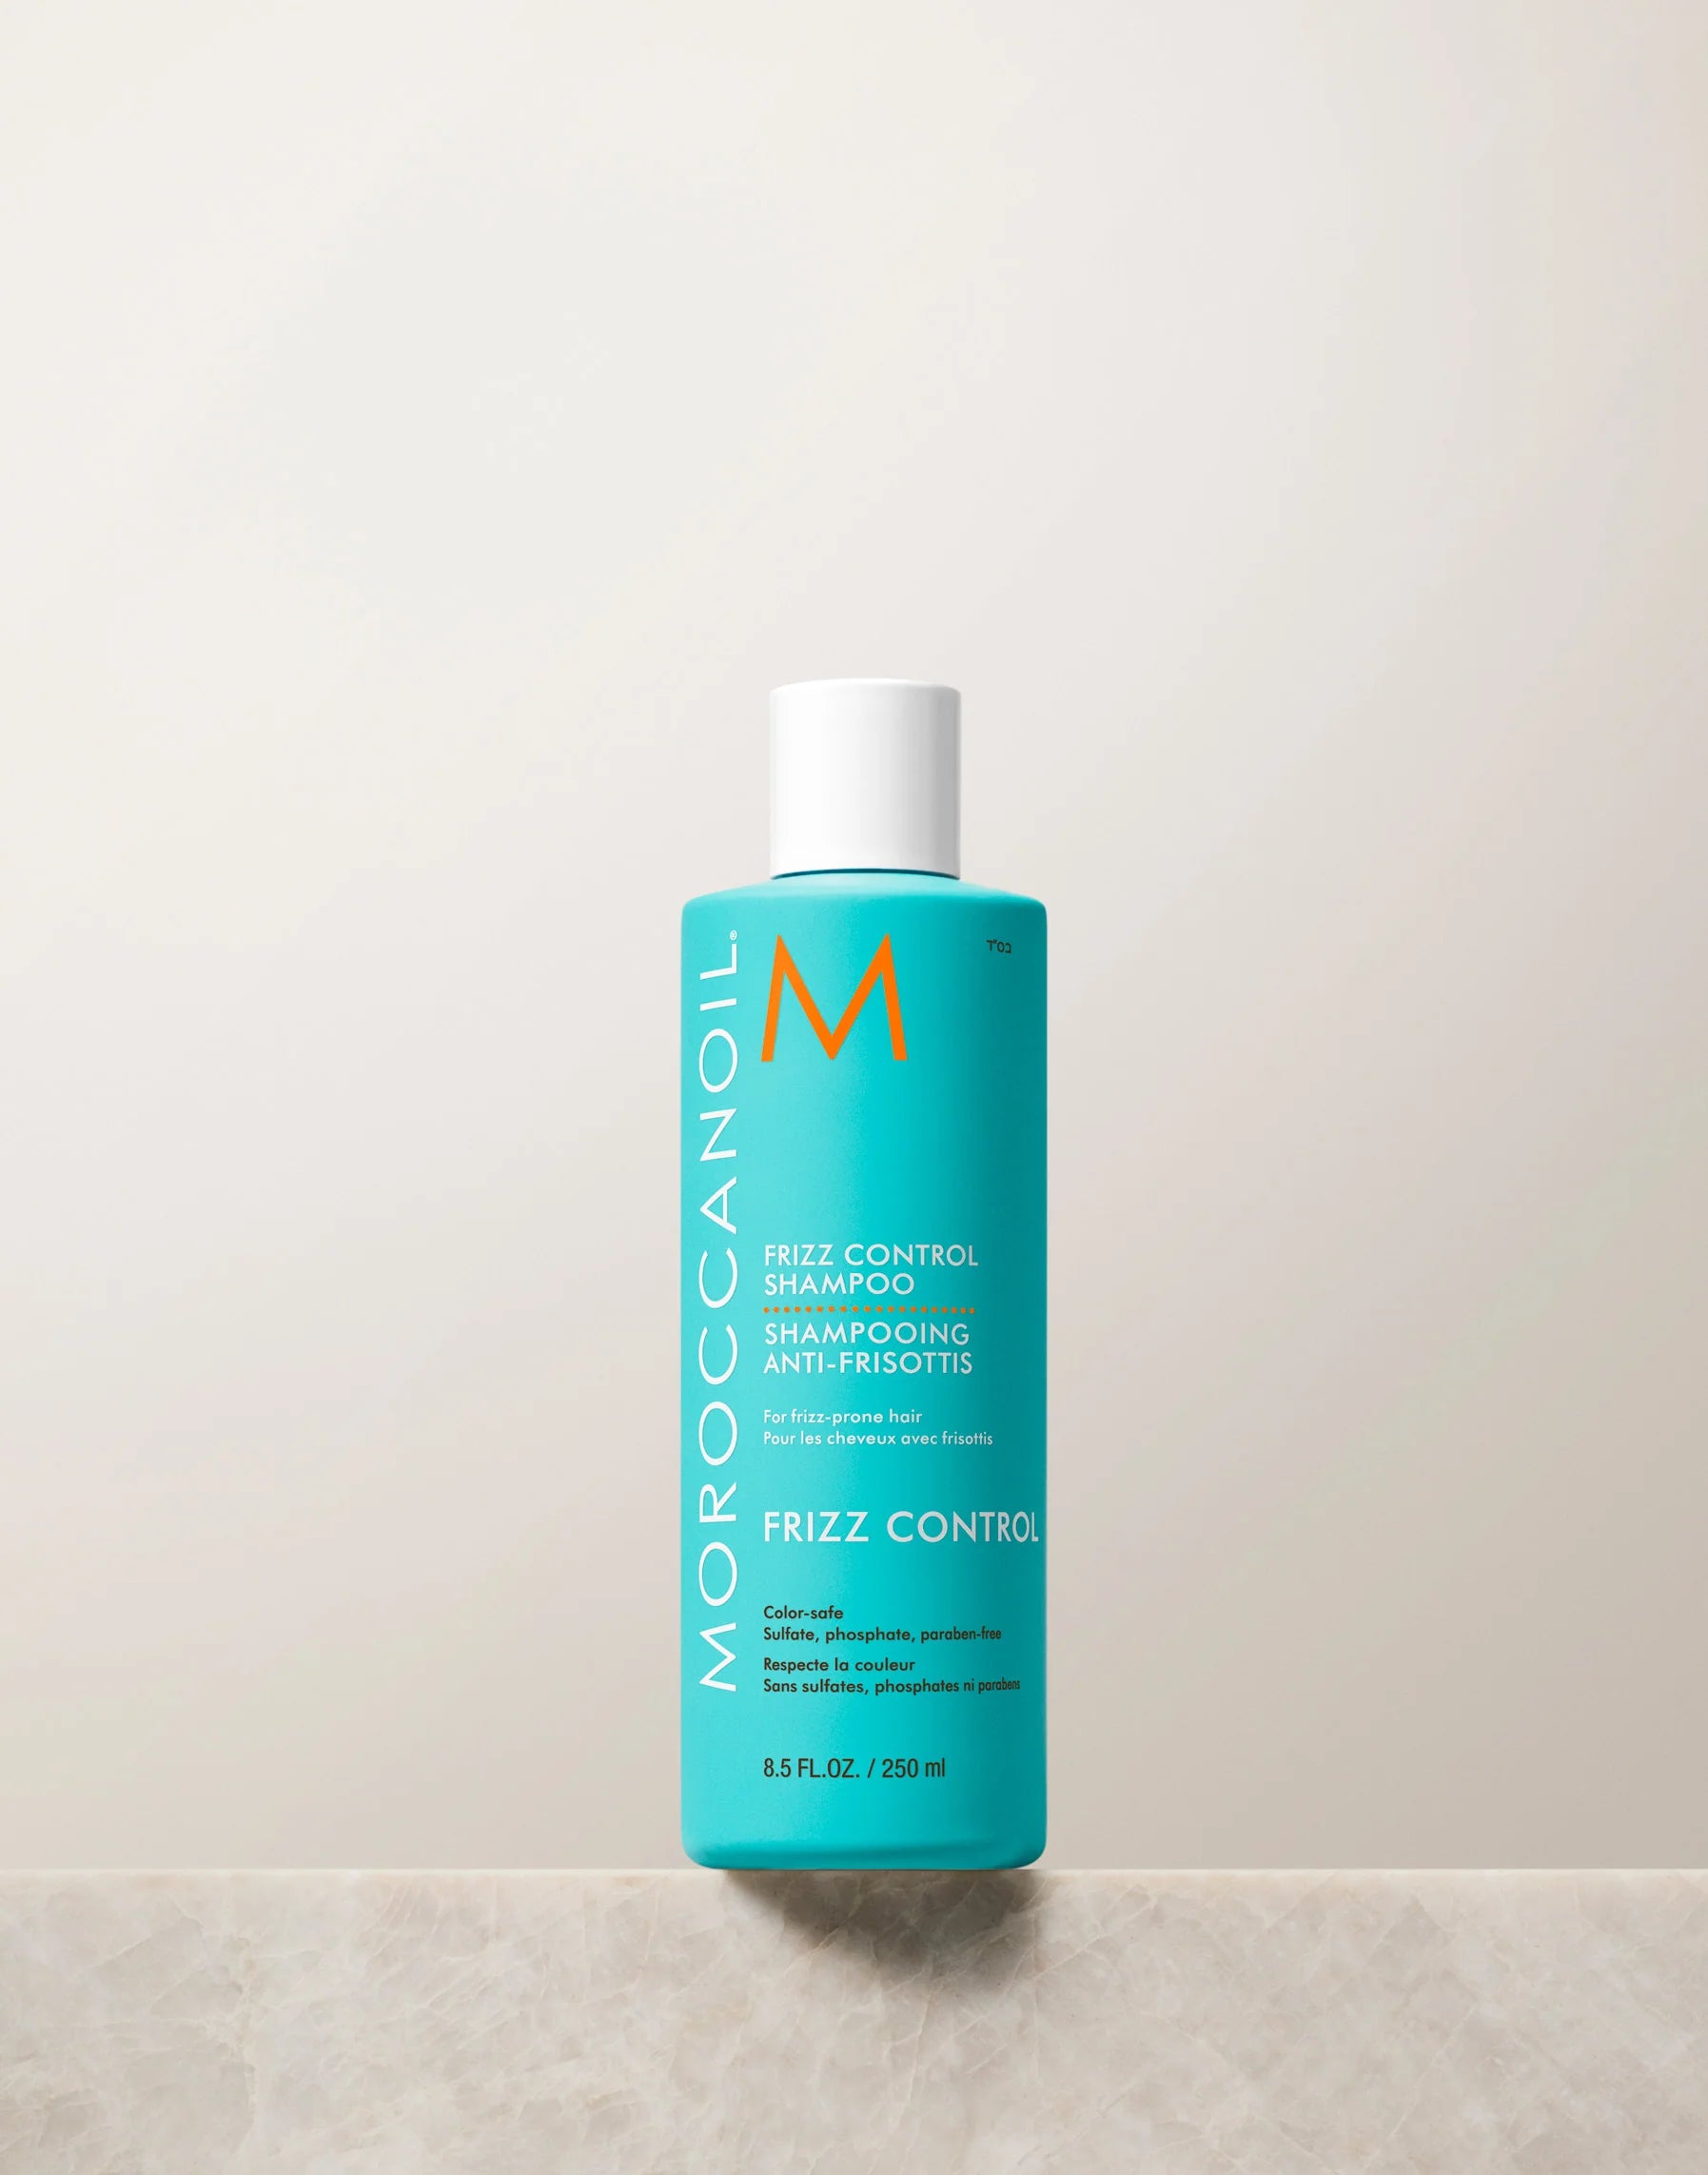 Gentle shampoo (MoroccanOil Frizz Control Shampoo)